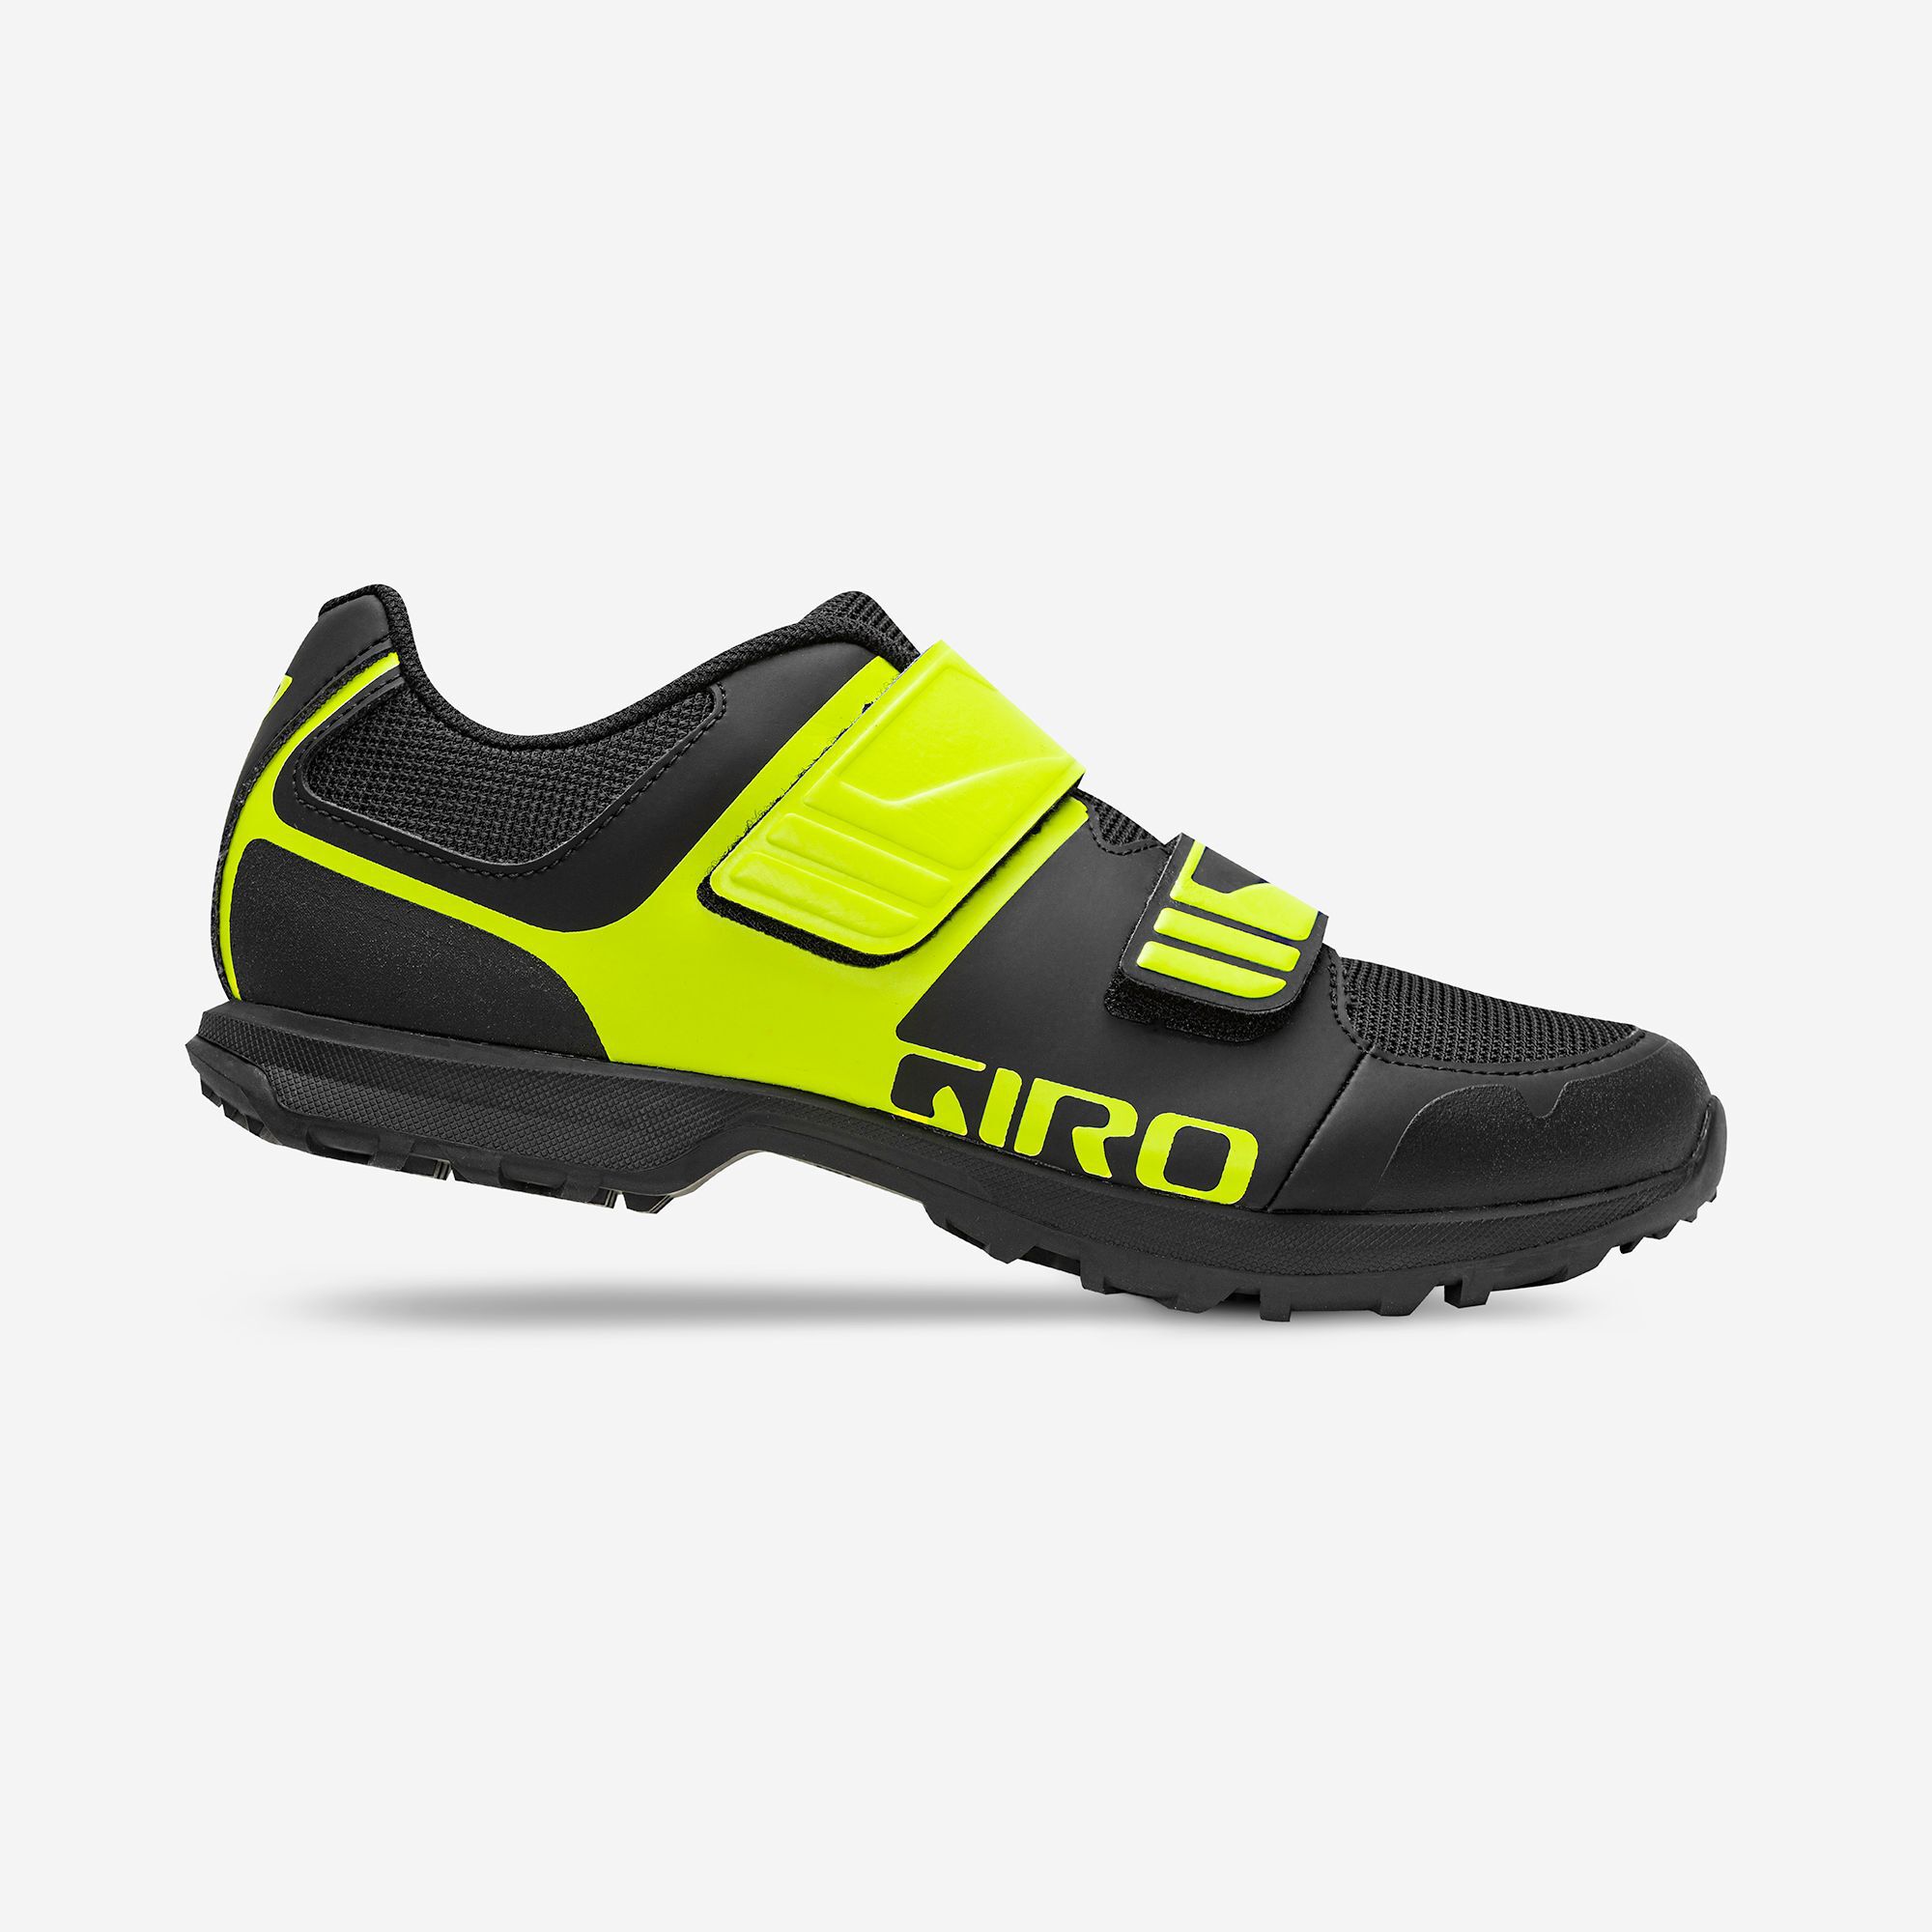 New Giro Carbide R MTB Bike Shoes 40 7.5 2-Bolt Black Men's Cycling Mountain SPD 